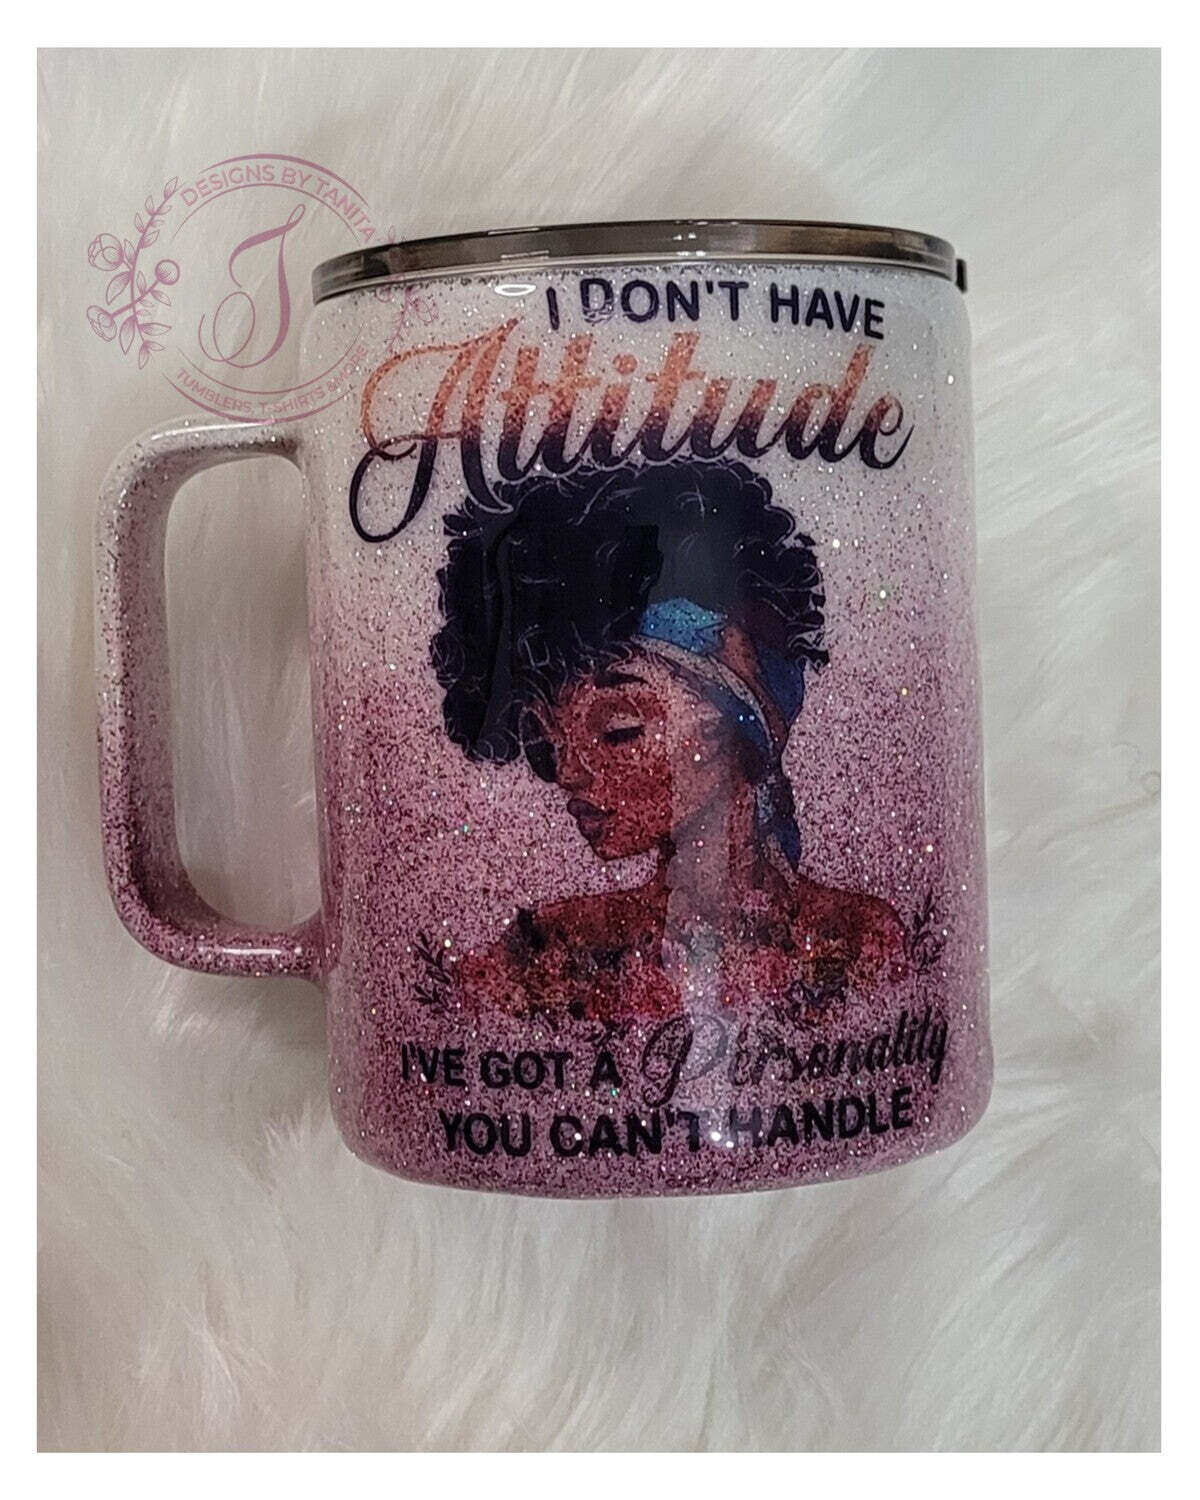 10 oz. "Attitude" Coffee Mug